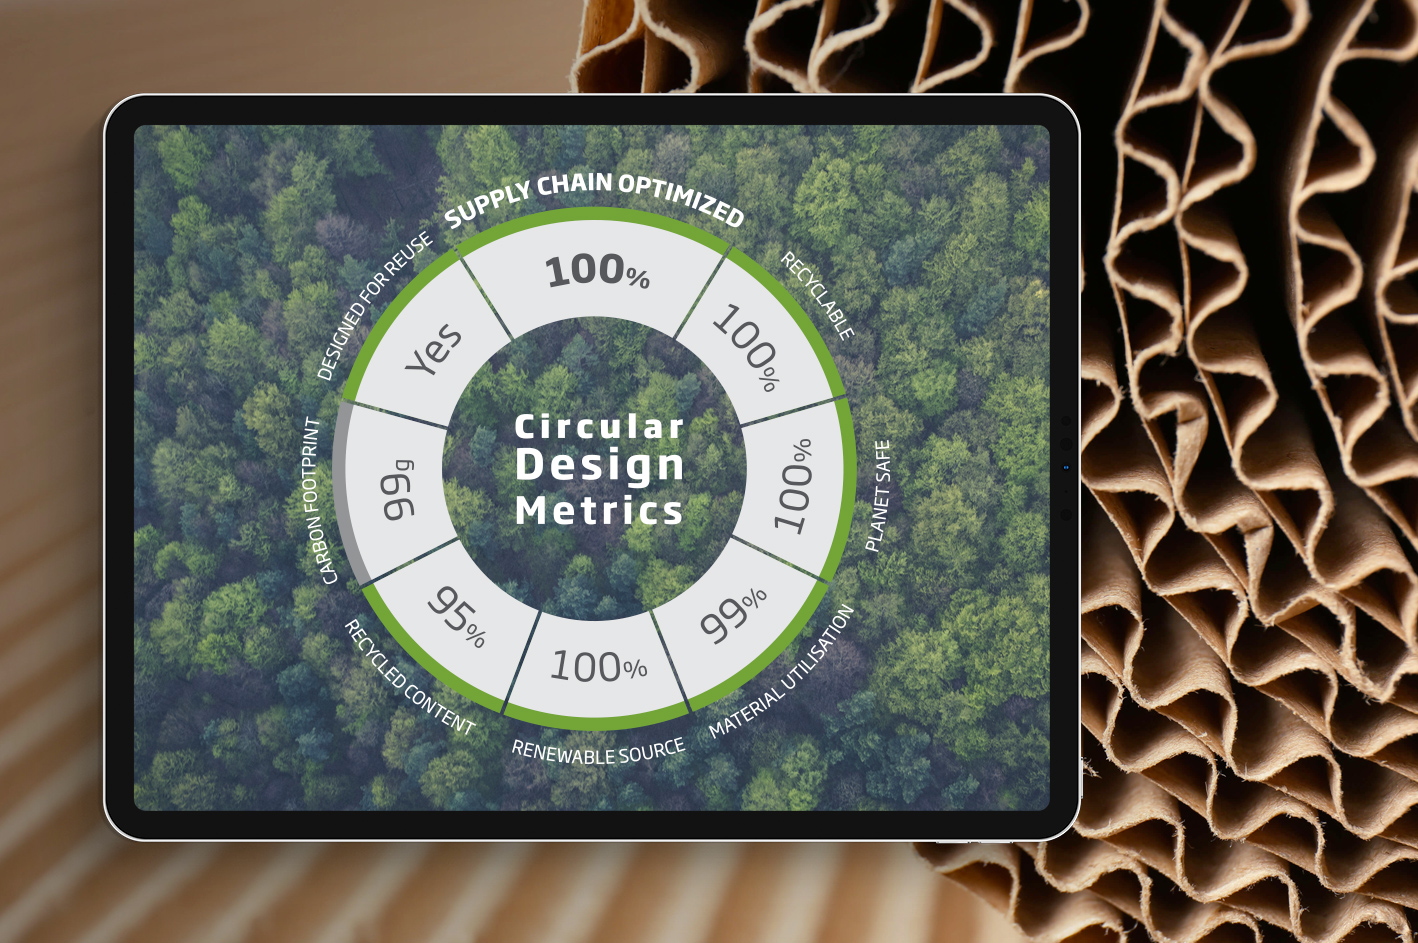 DS Smith Circular Design Metrics on corrugated